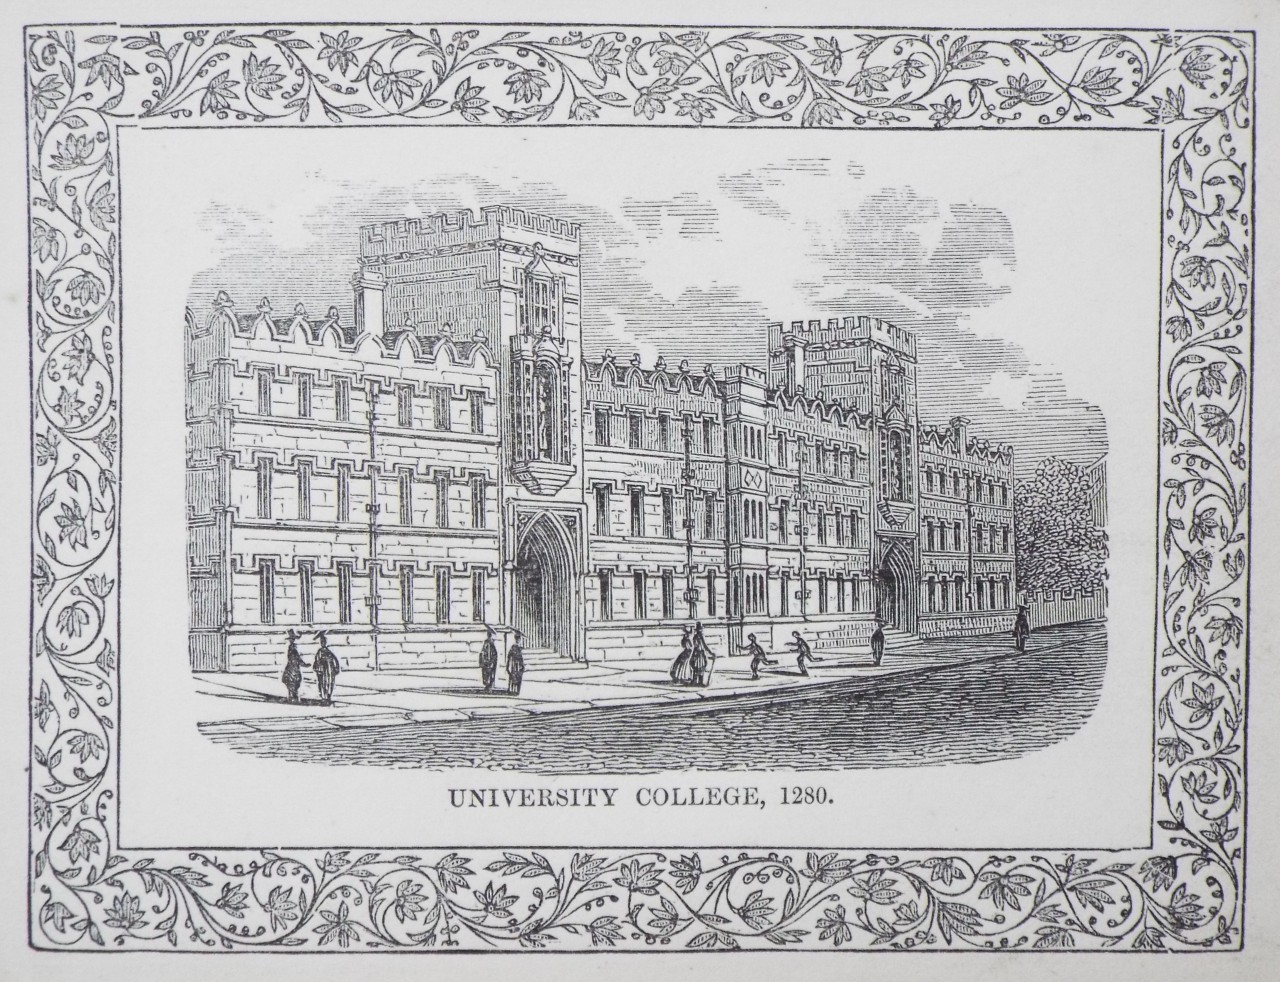 Wood - University College, 1280. - Whittock